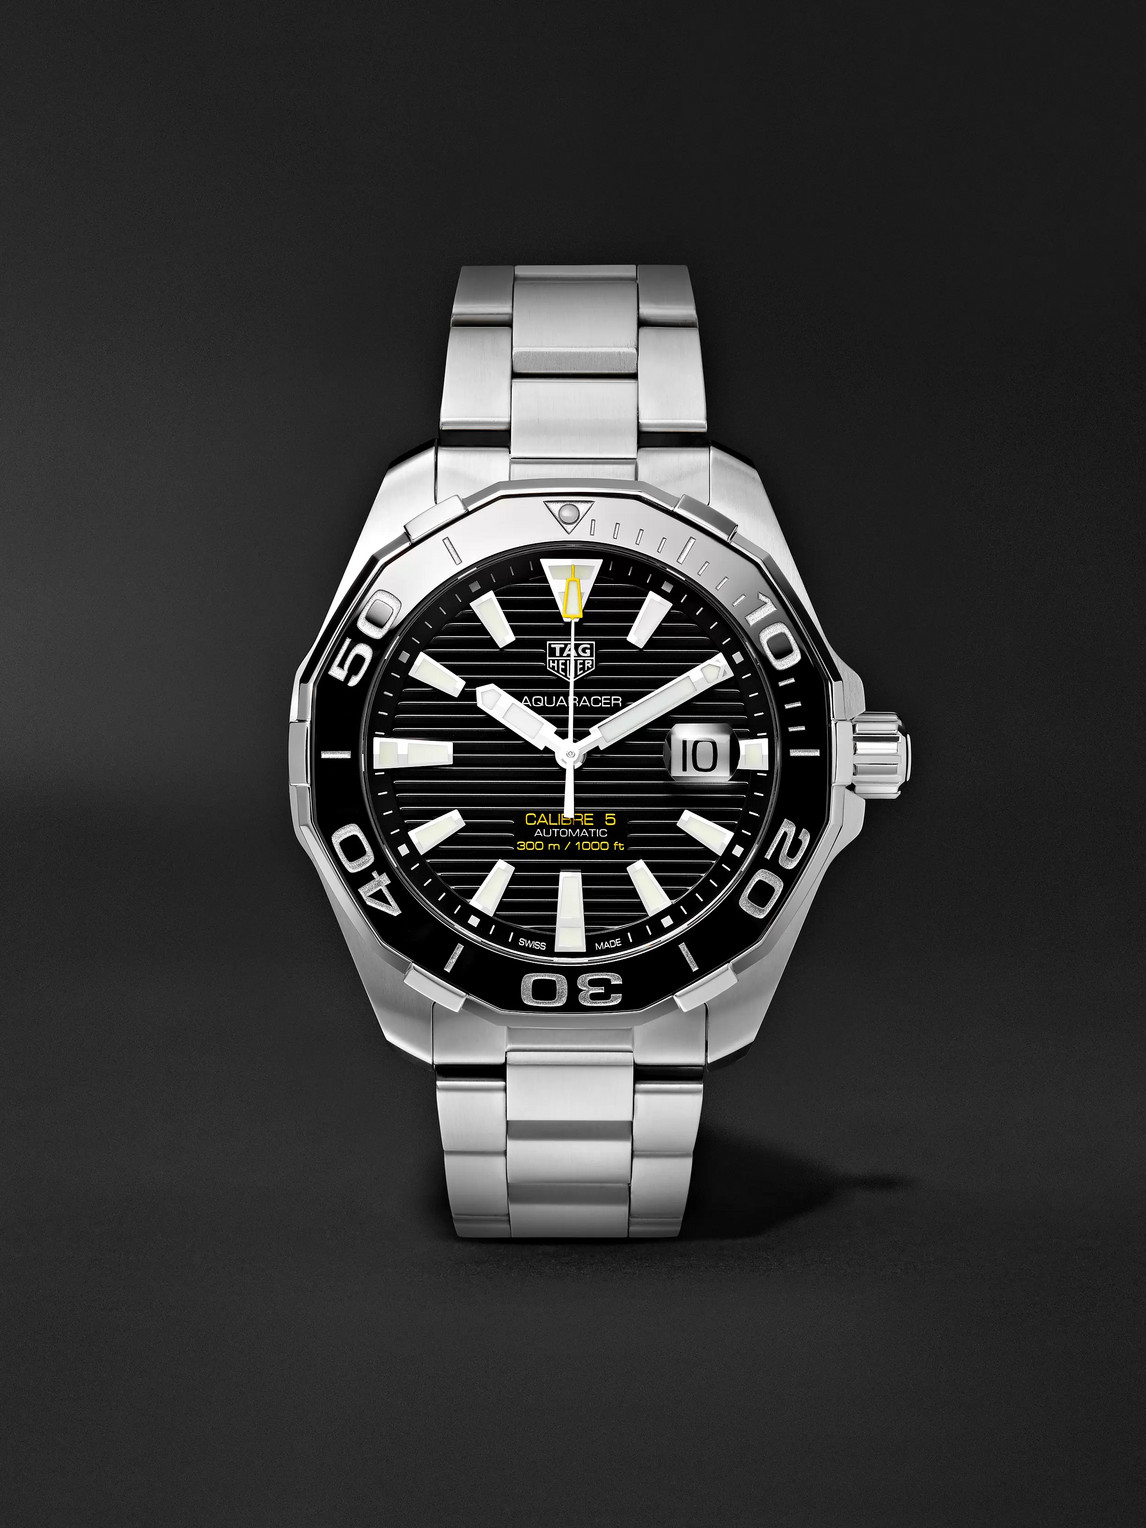 Tag Heuer Aquaracer Automatic 43mm Steel Watch, Ref. No. Way201a.ba0927 In Black